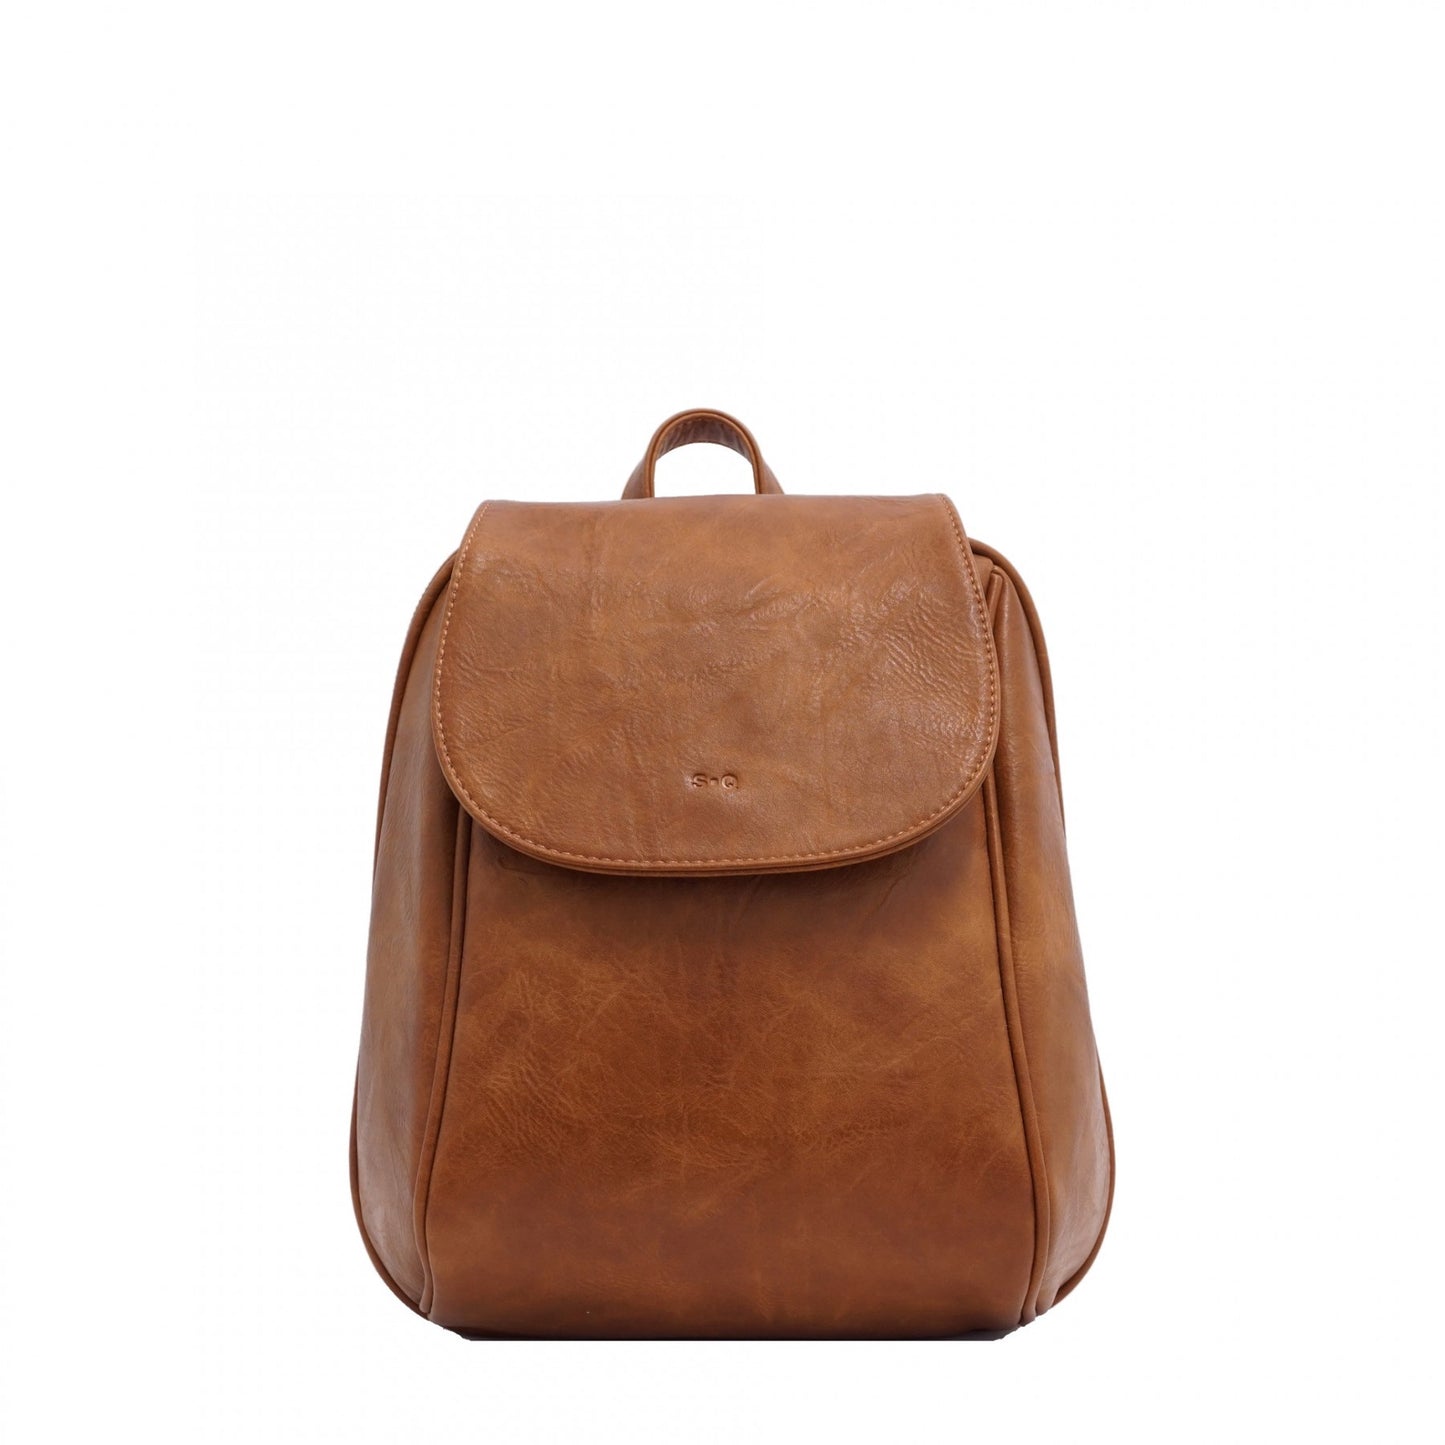 Convertible Backpack - "Jada" style